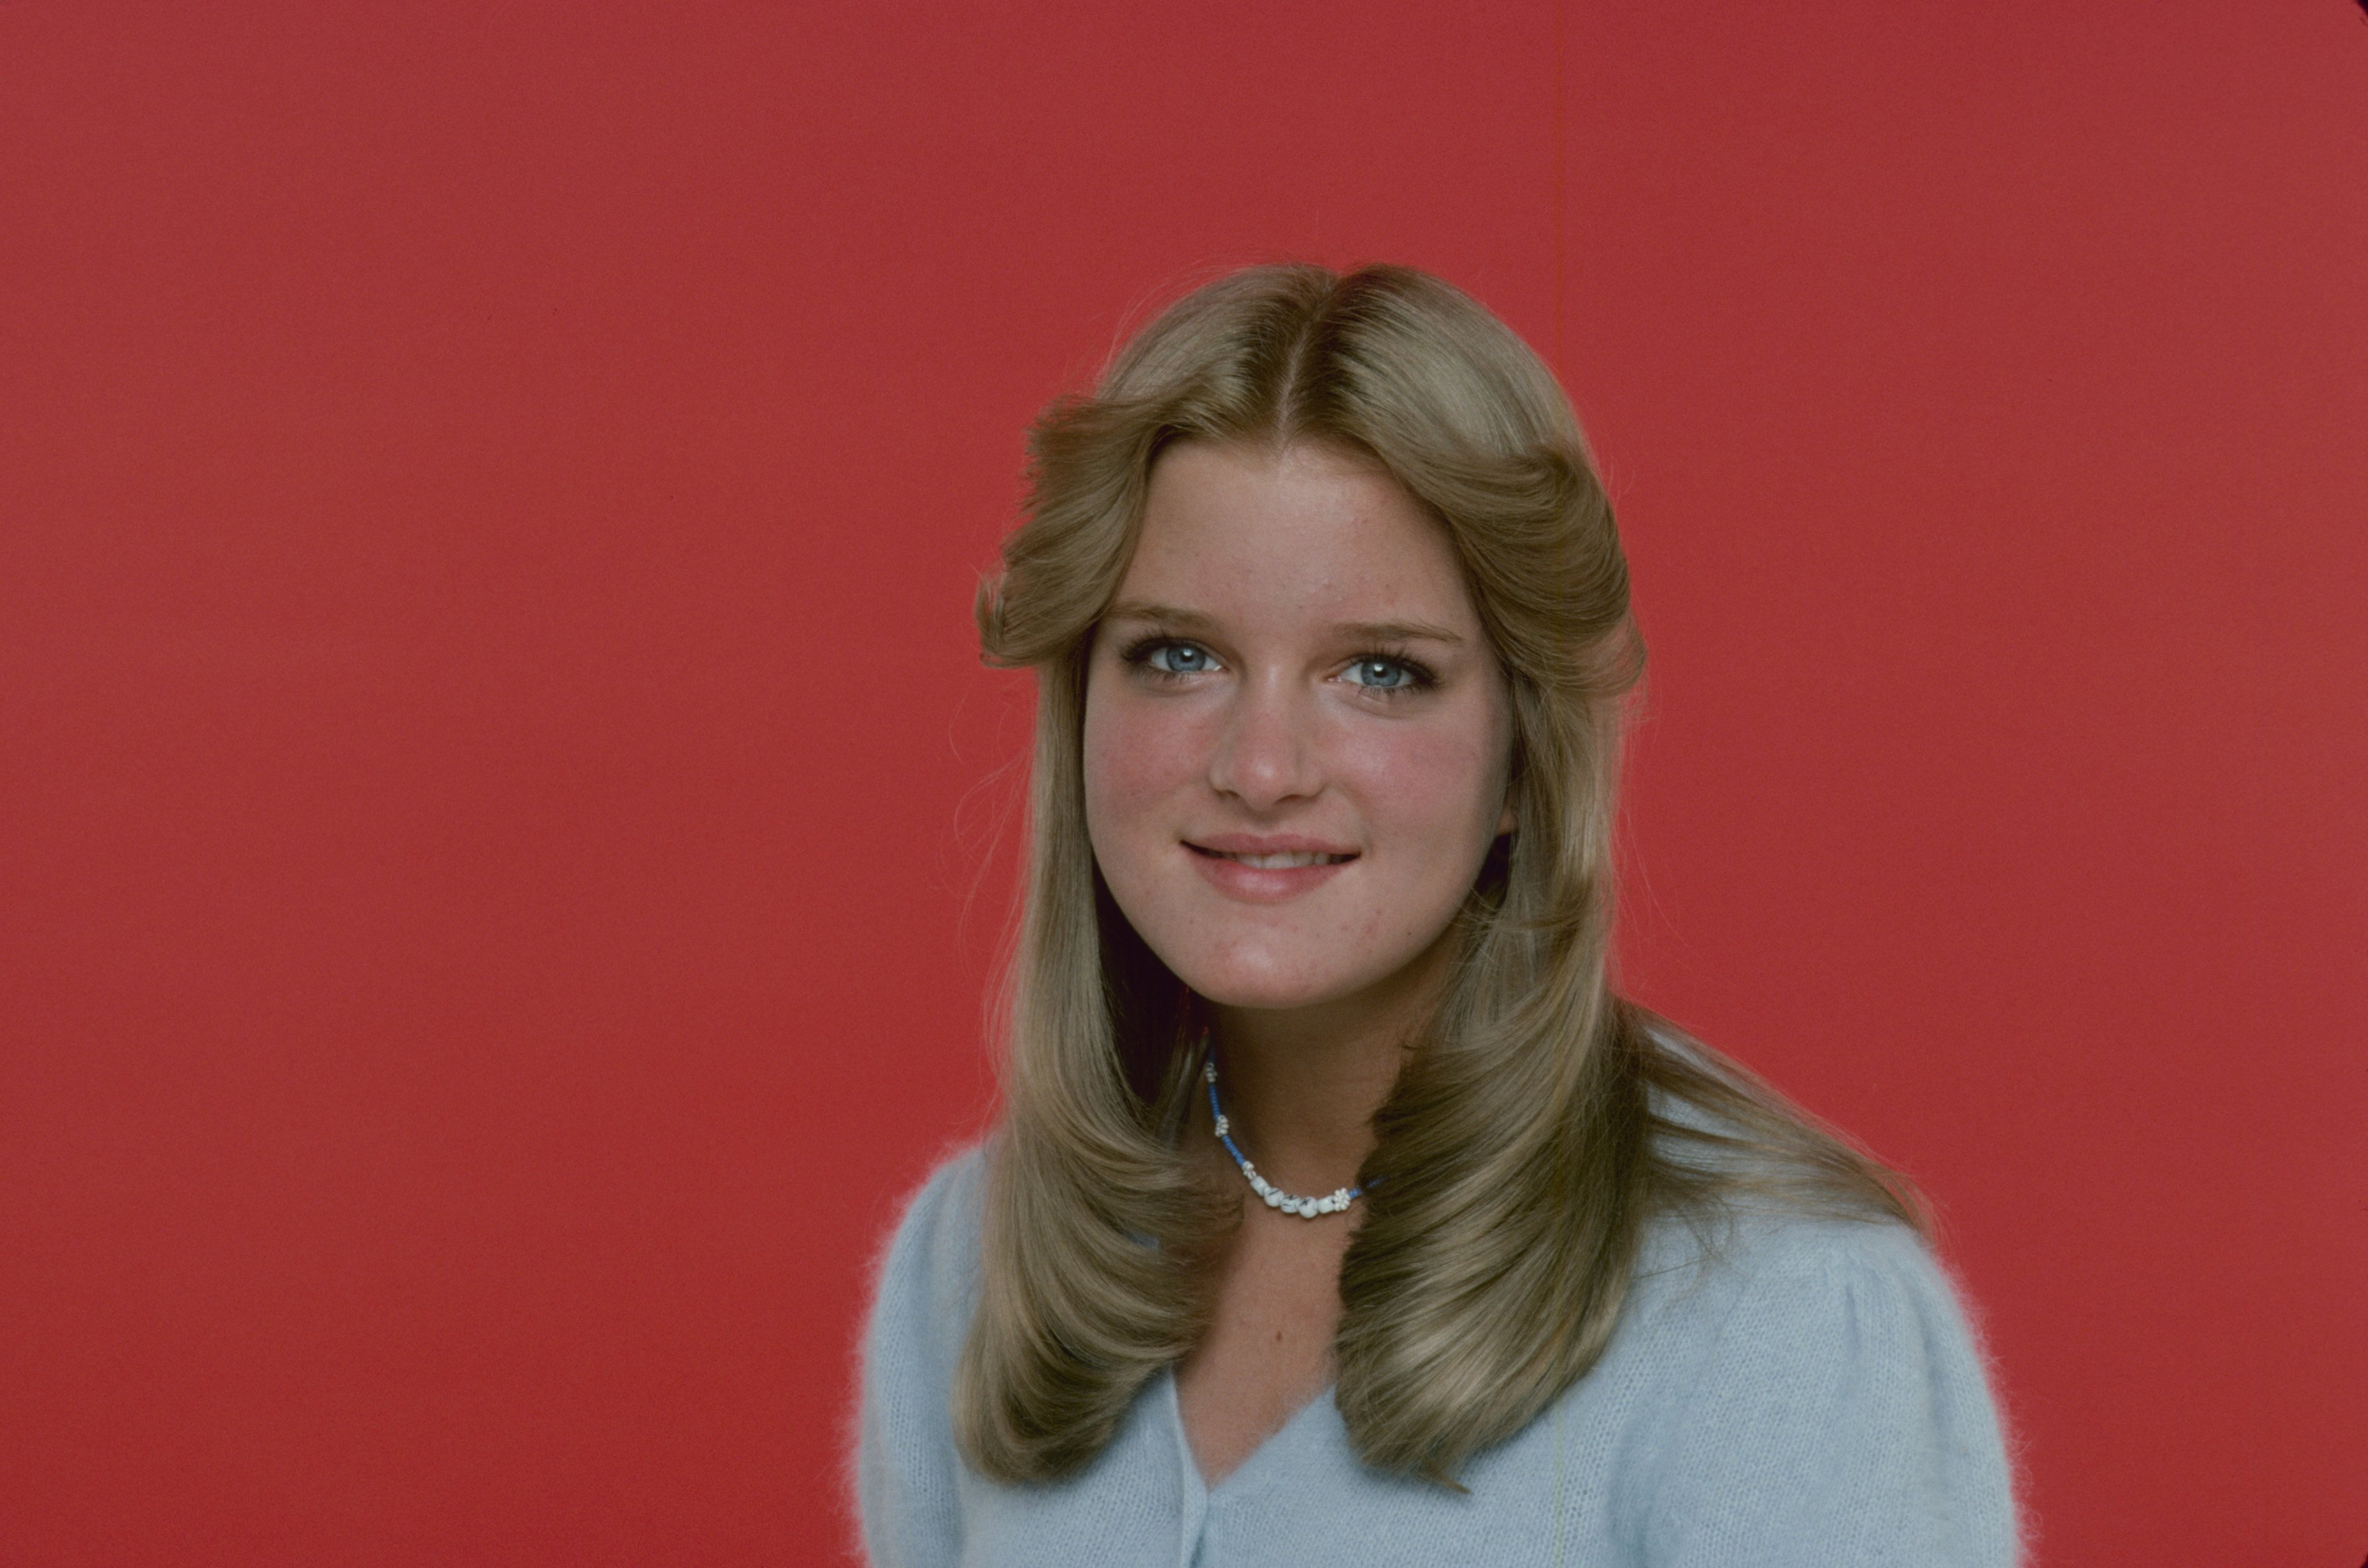 Susan Olsen in November 1976 | Source: Getty Images